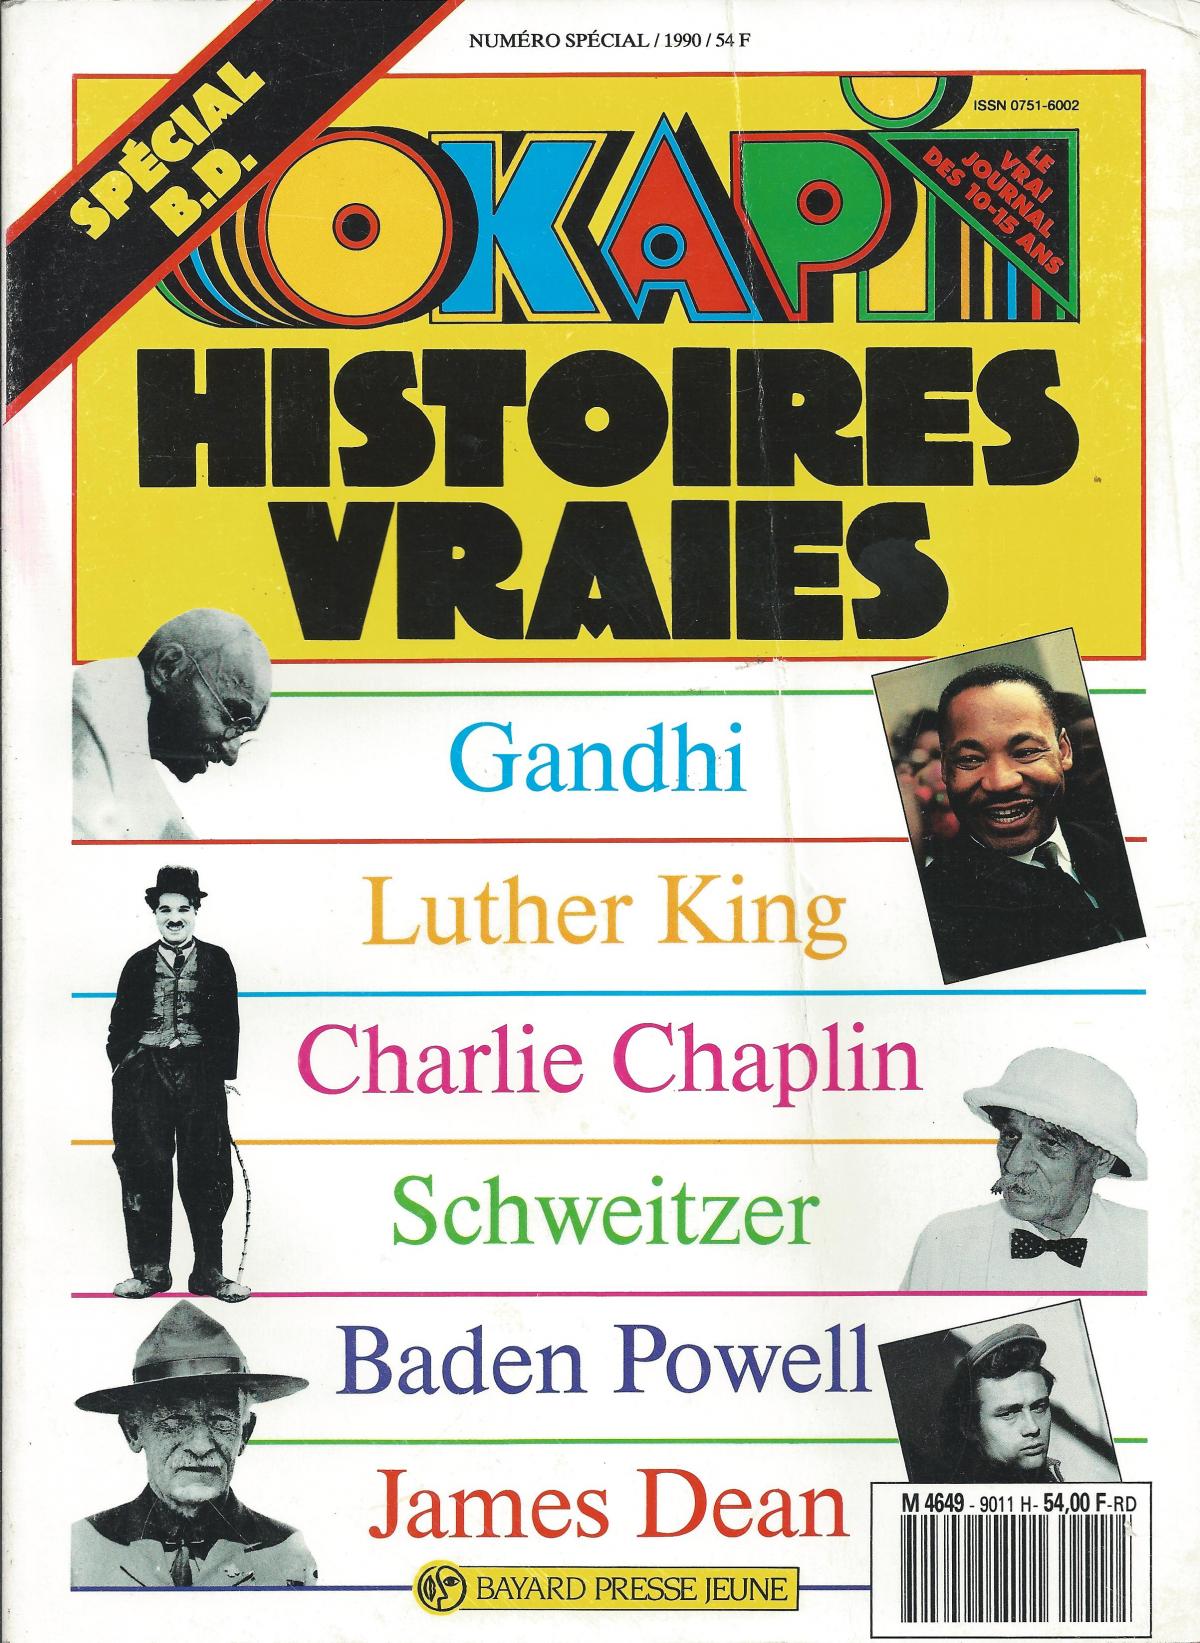 Histoires vraies, Gandhi, Luther King, Charlie Chaplin, Schweitzer, Baden Powell, James dean